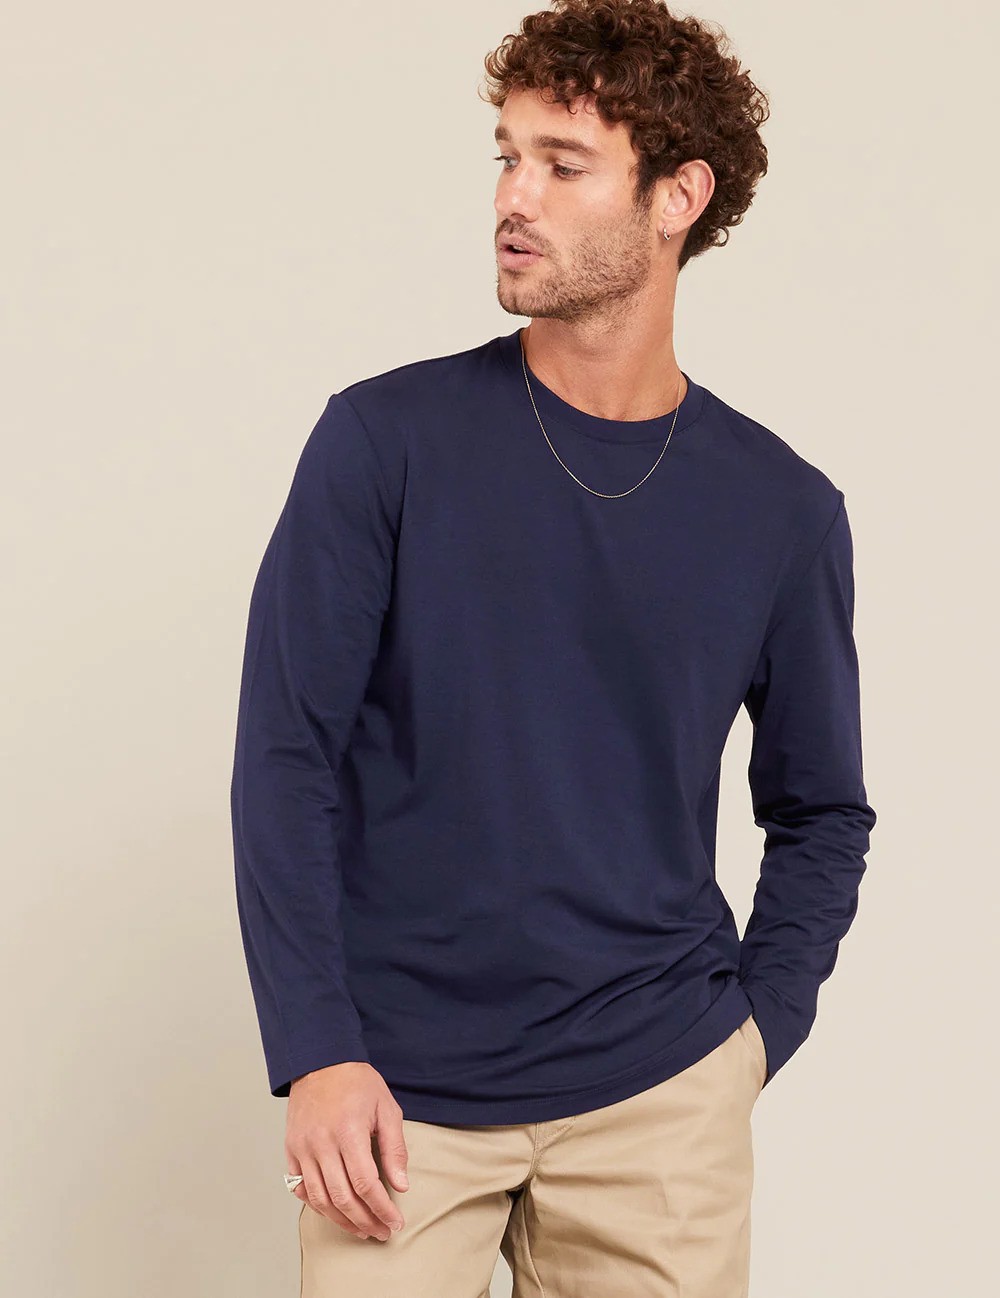 Traditional long-sleeved T-Shirt for Men